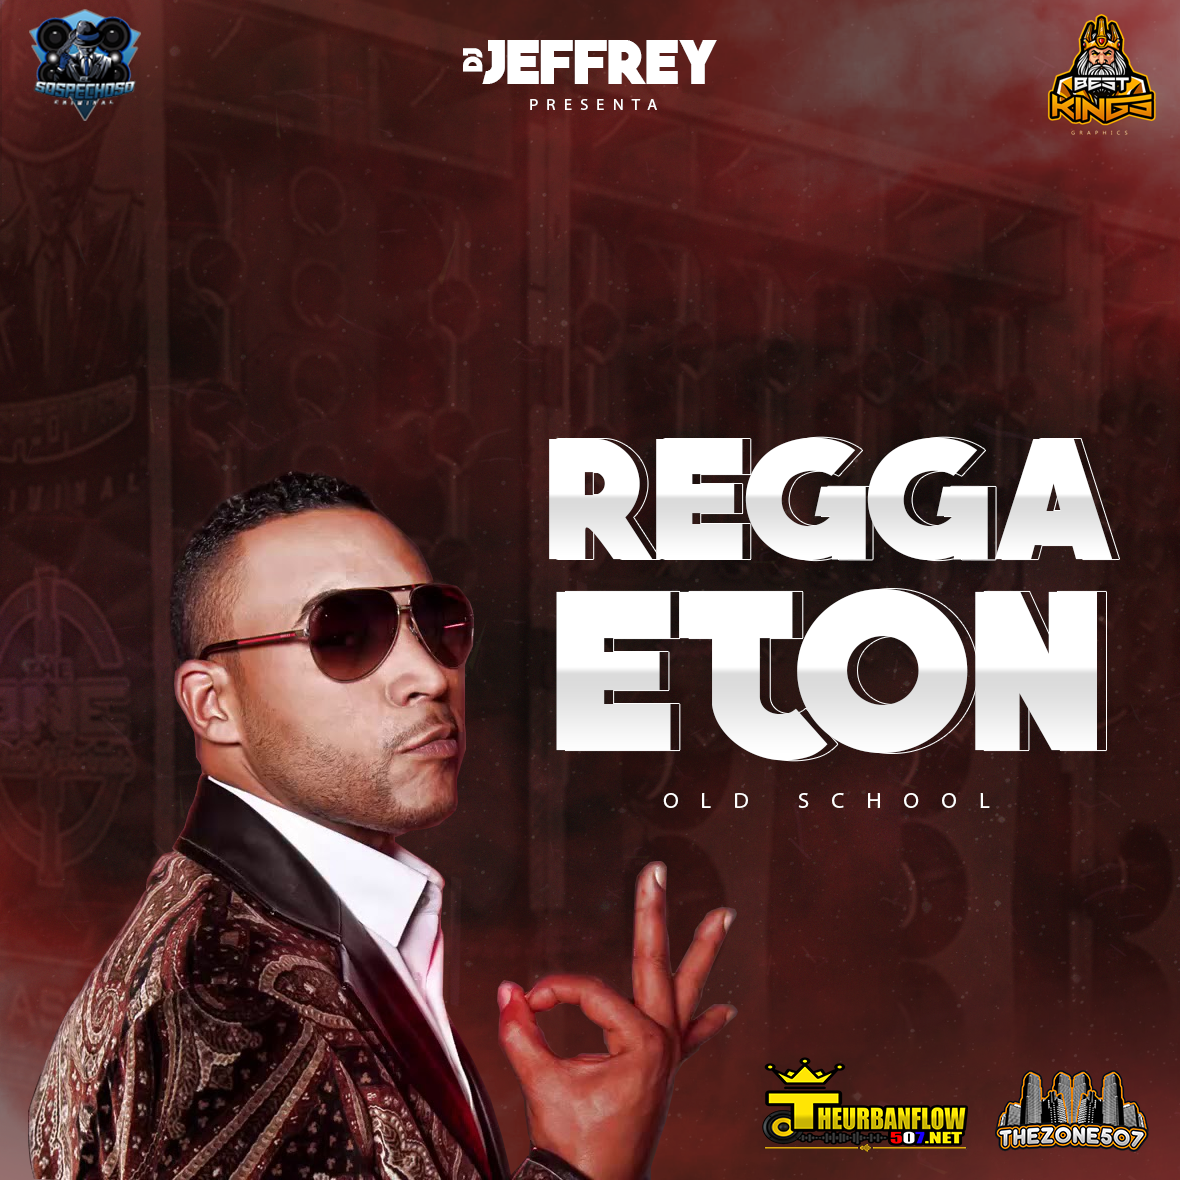 Reggaeton Old School Vol.1 By Dj Jeffrey (djsthezone507)